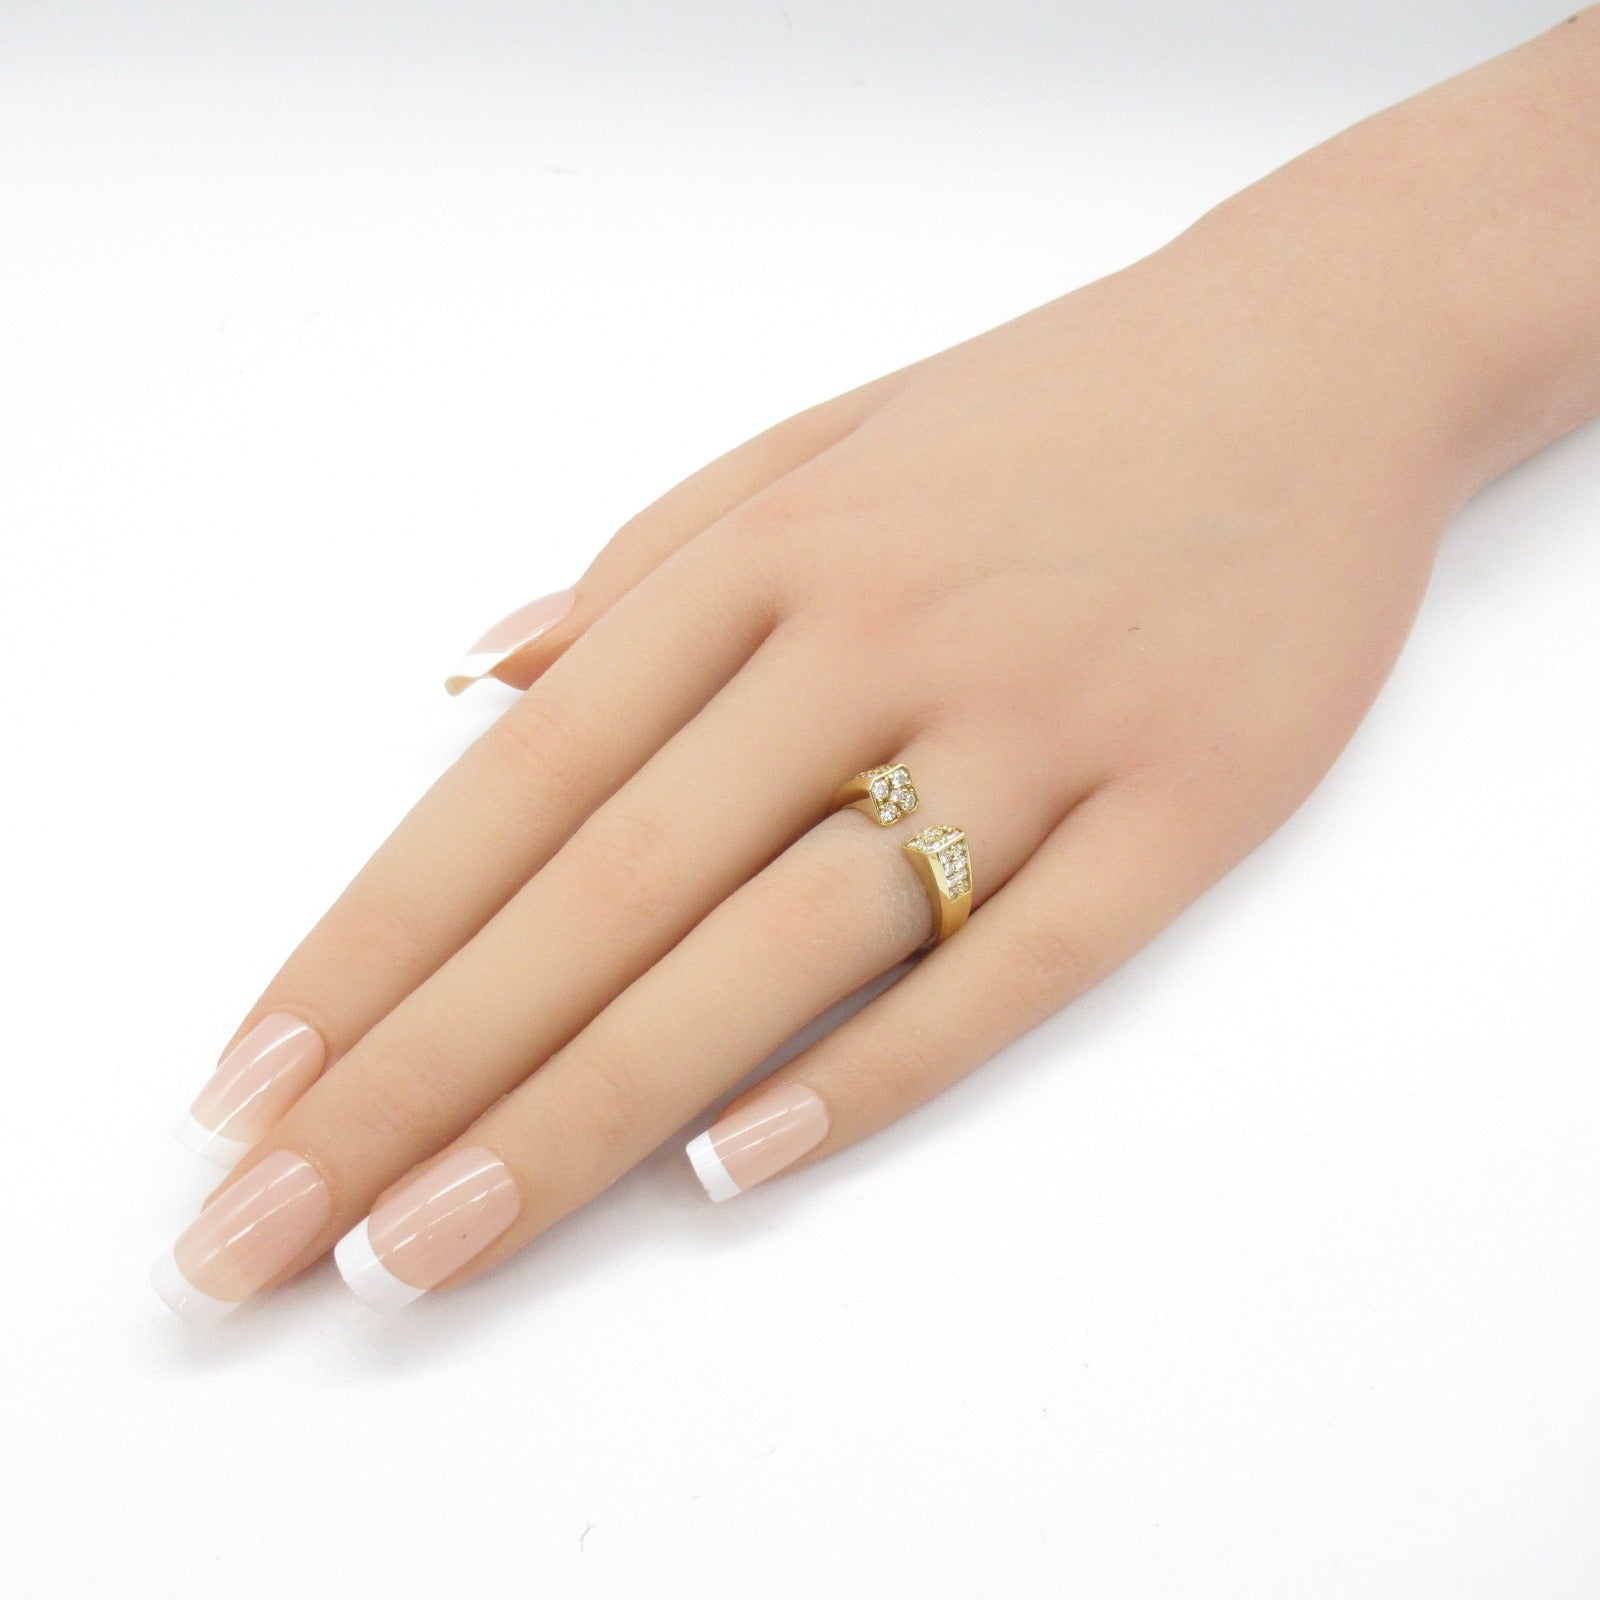 Jewelry Jewelry Diamond Ring Ring Ring Jewelry K18 (yellow g) Diamond  Clear Diamond 5.8g